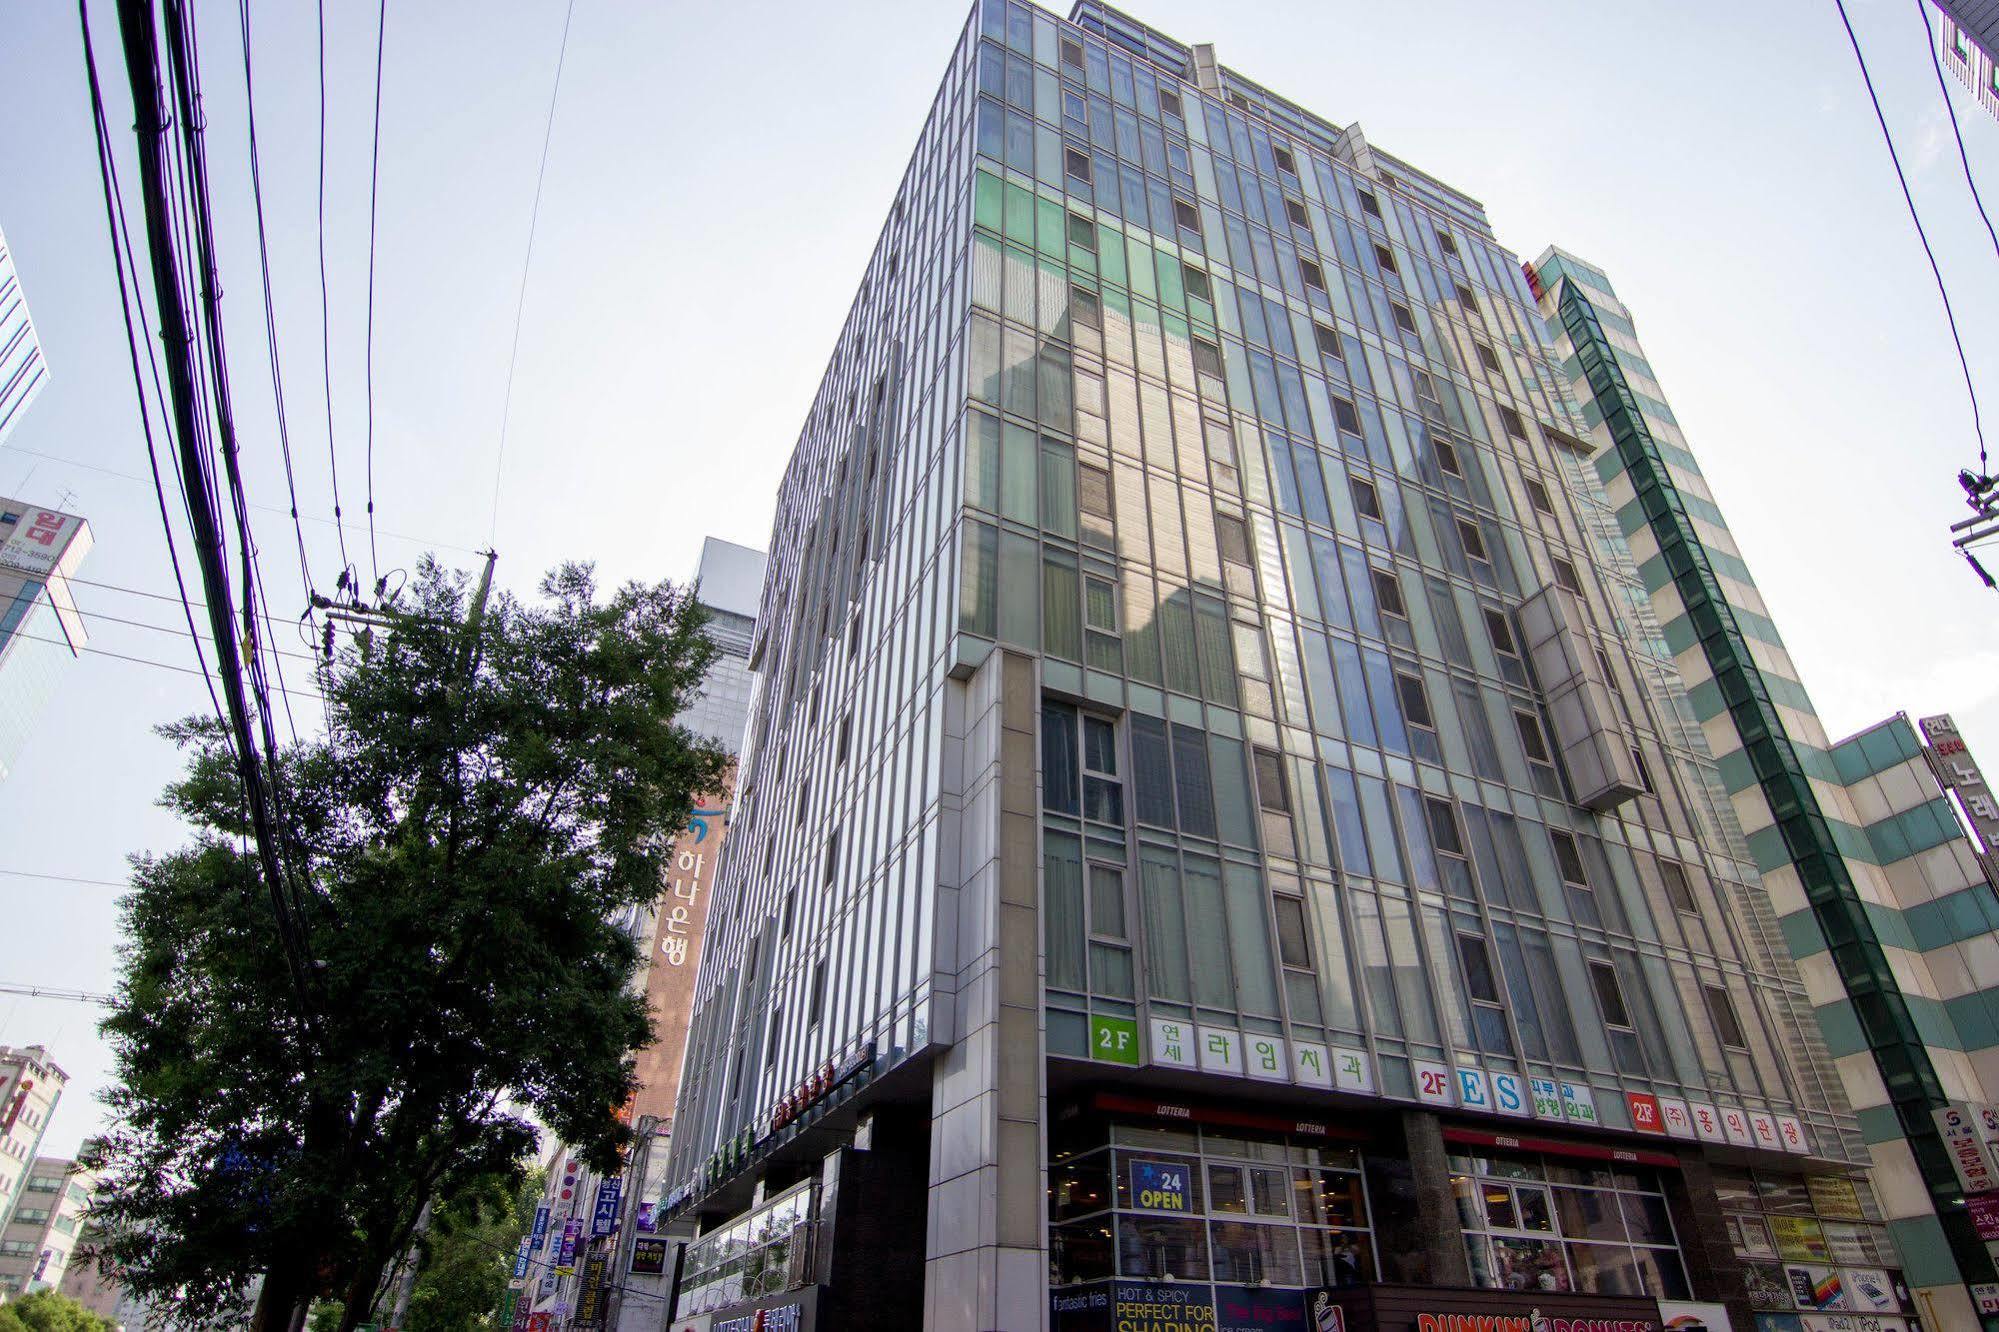 Casaville Residence Shinchon Seoul Exterior photo